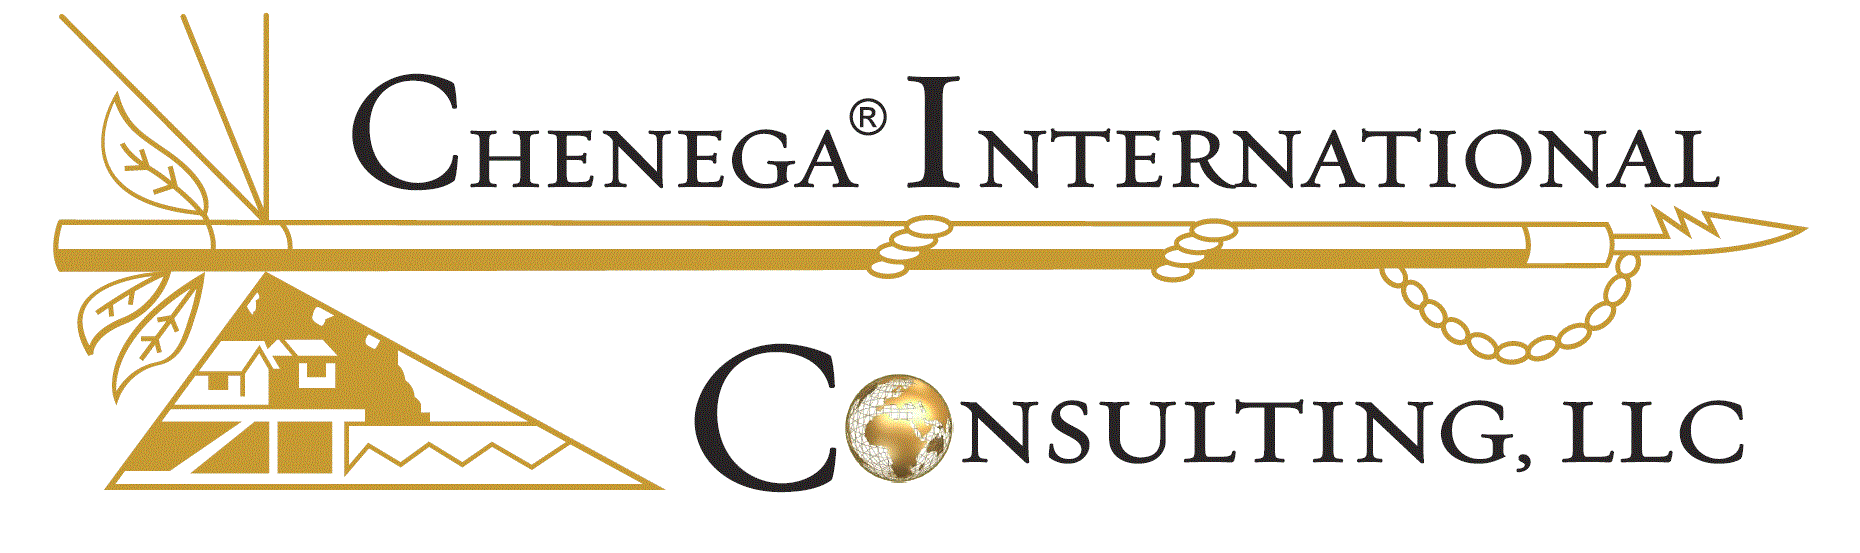 Chenega International Consulting LLC